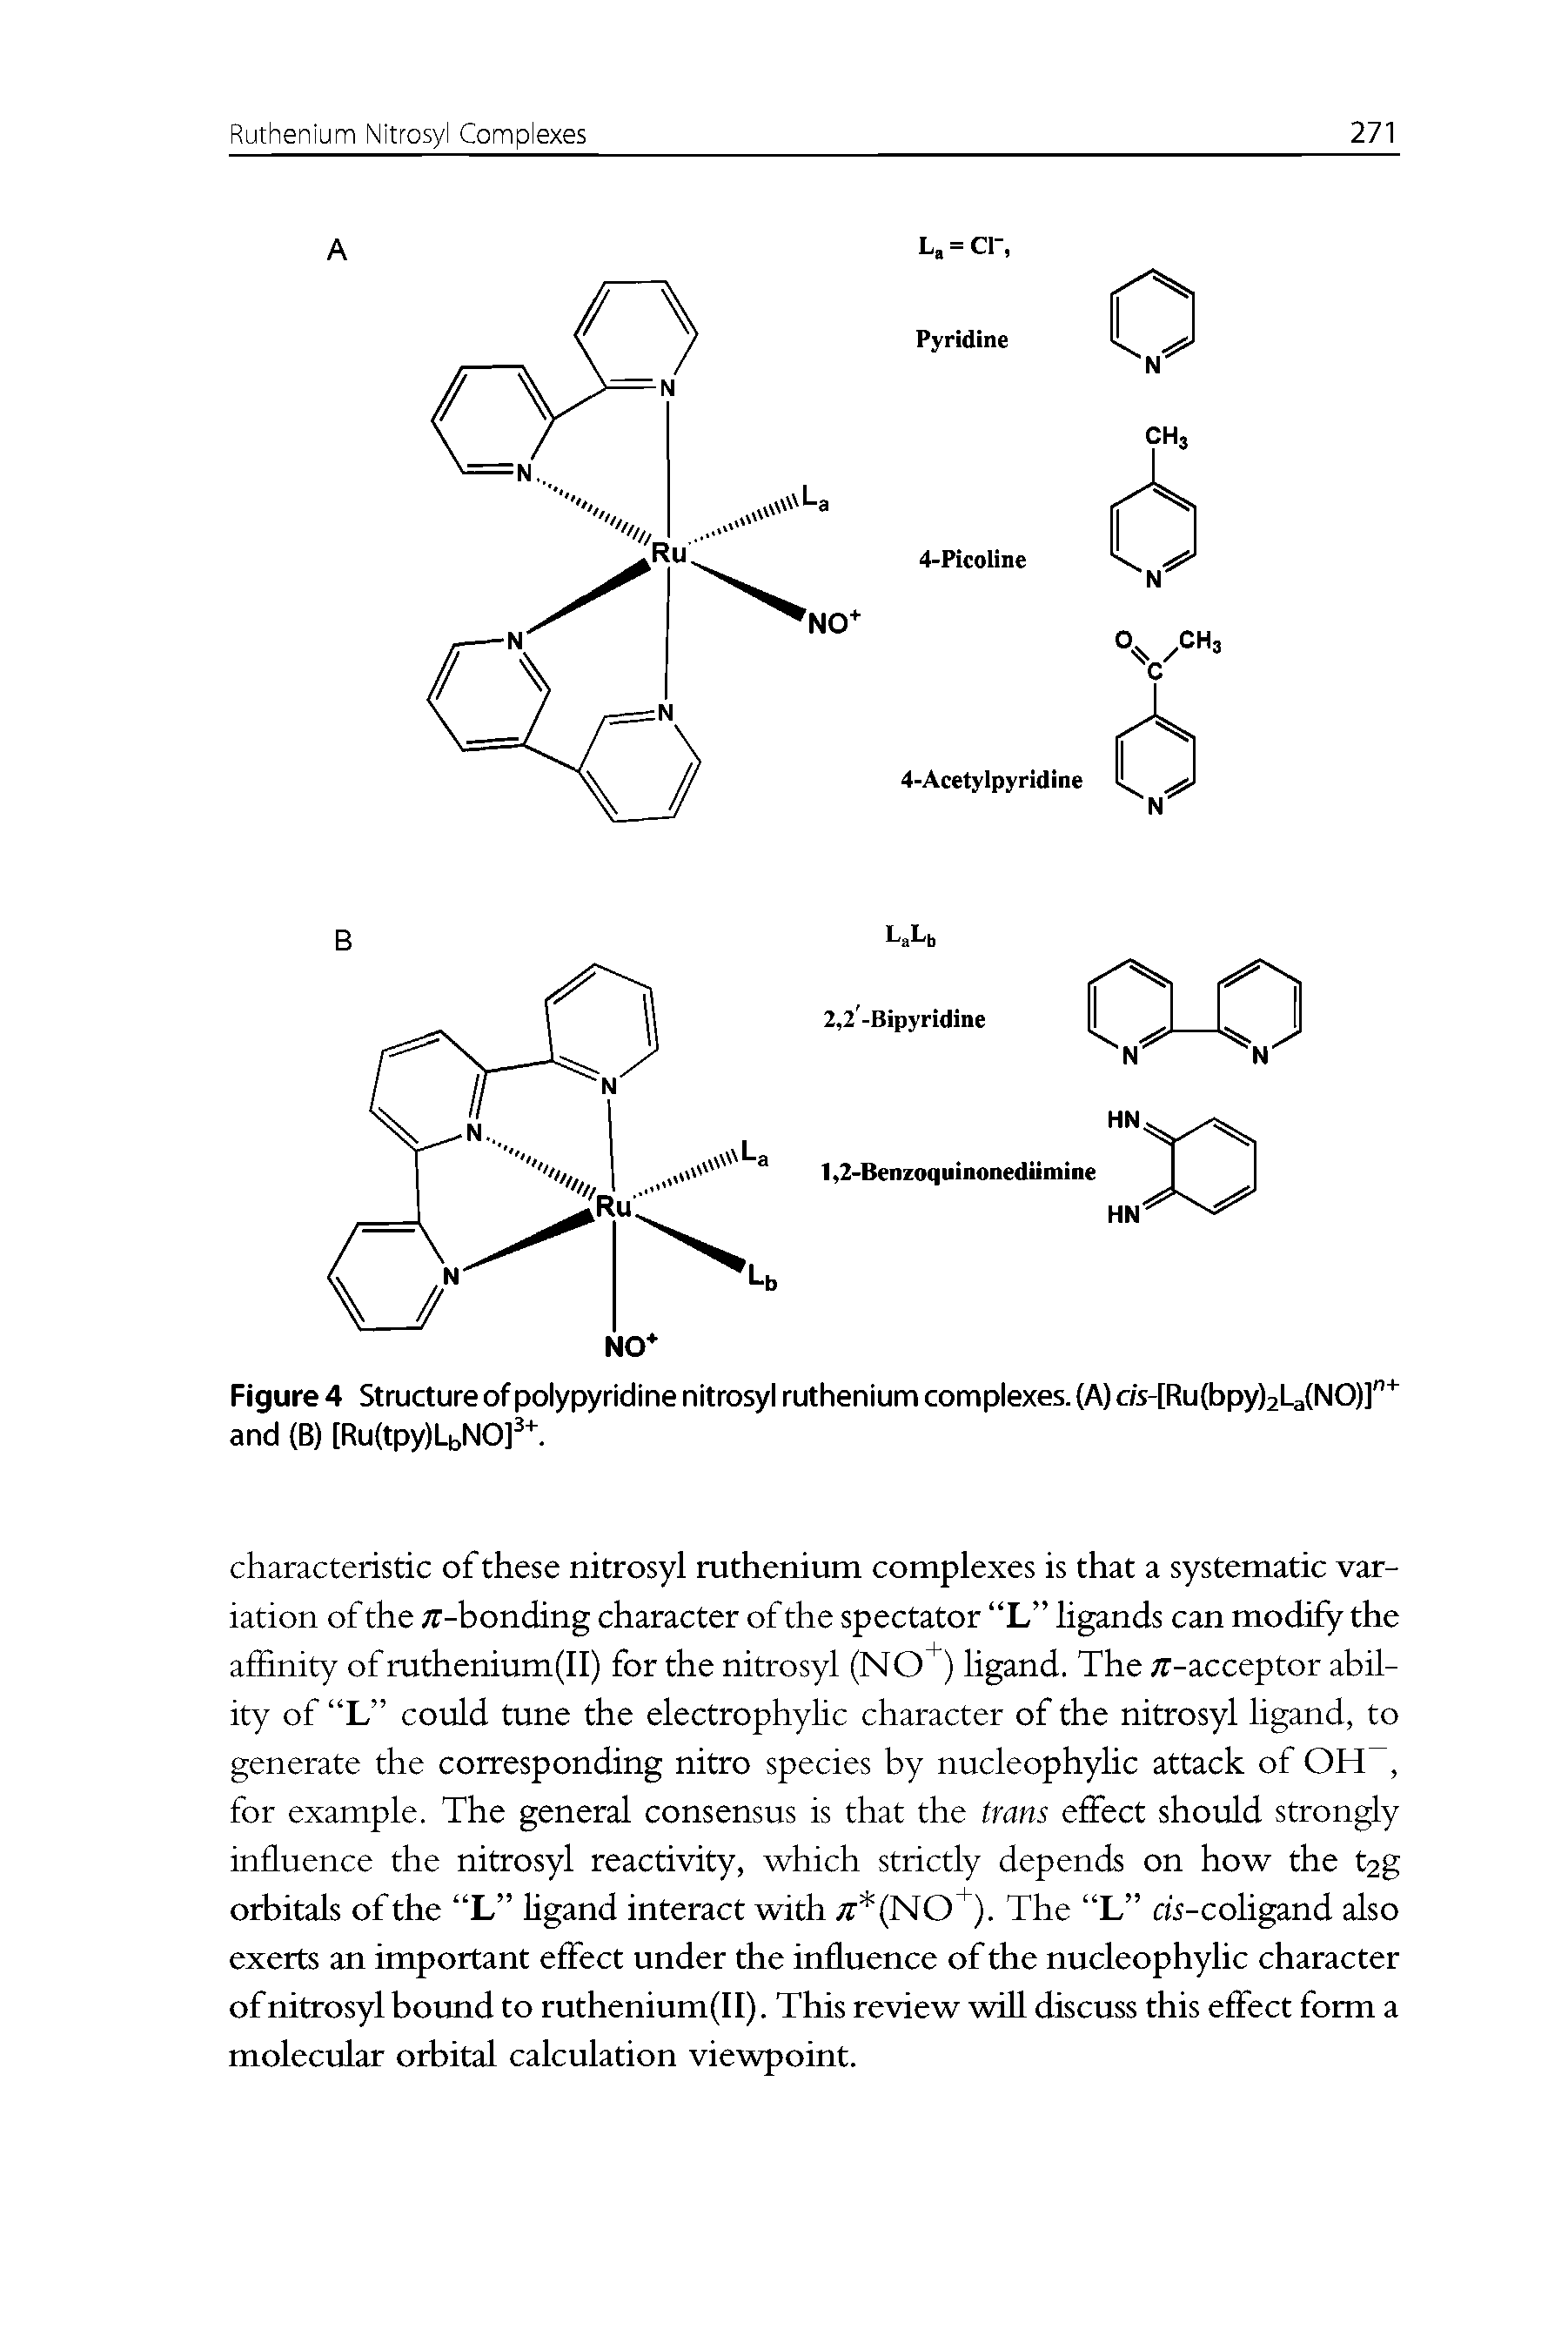 Figure 4 Structure of polypyridine nitrosyl ruthenium complexes. (A) c/s-[Ru(bpy)2La(NO)]" and (B) [Ru(tpy)LbNO] ...